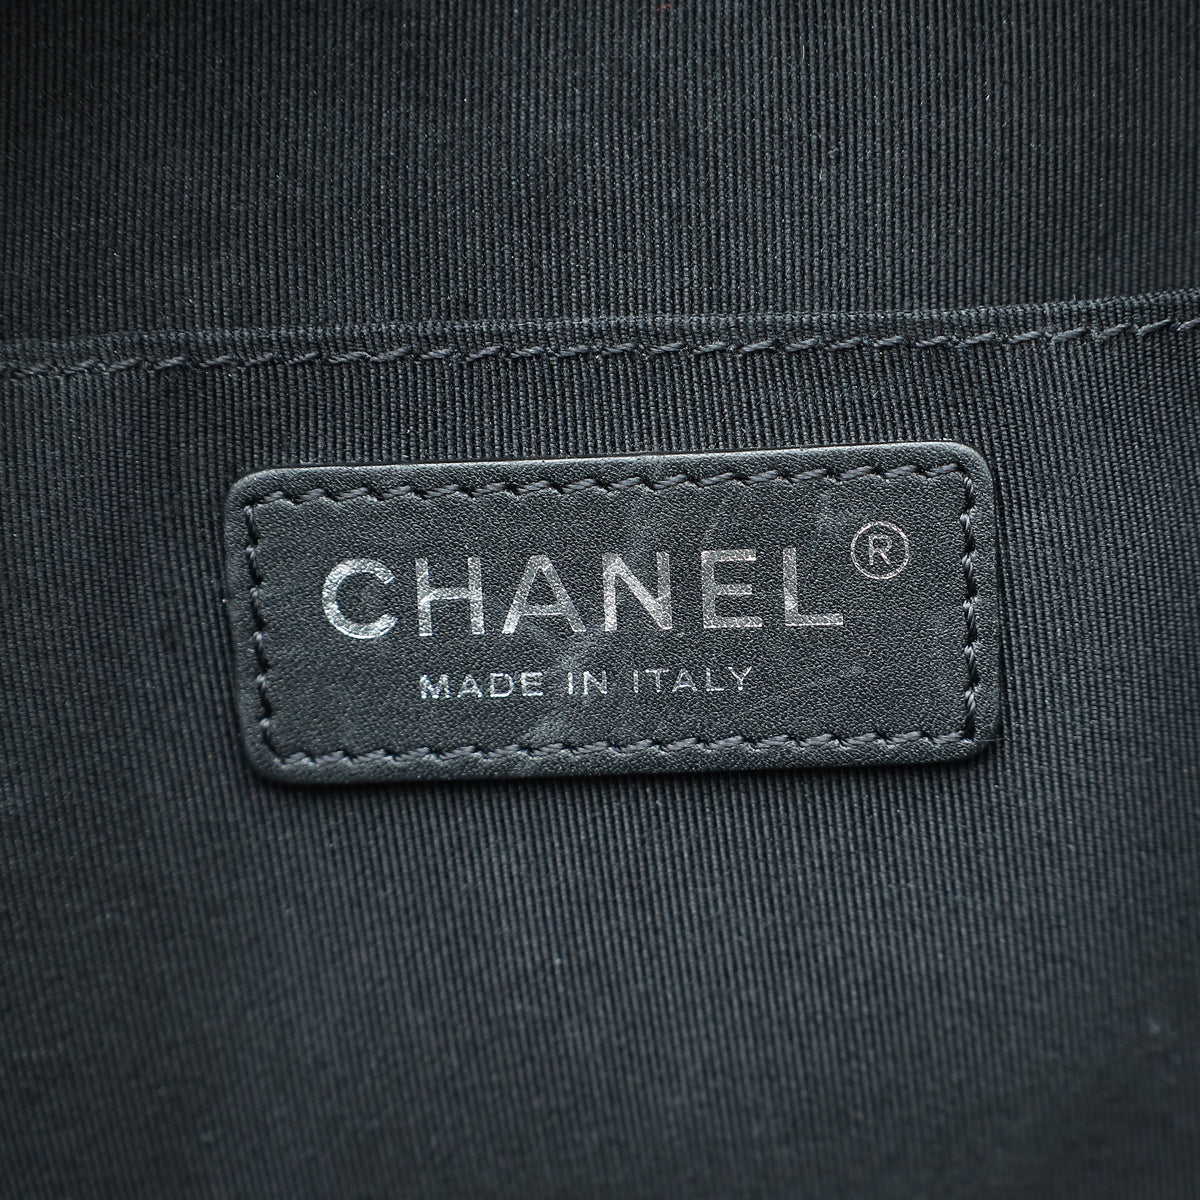 Chanel Black CC CC Box Camera Small Bag